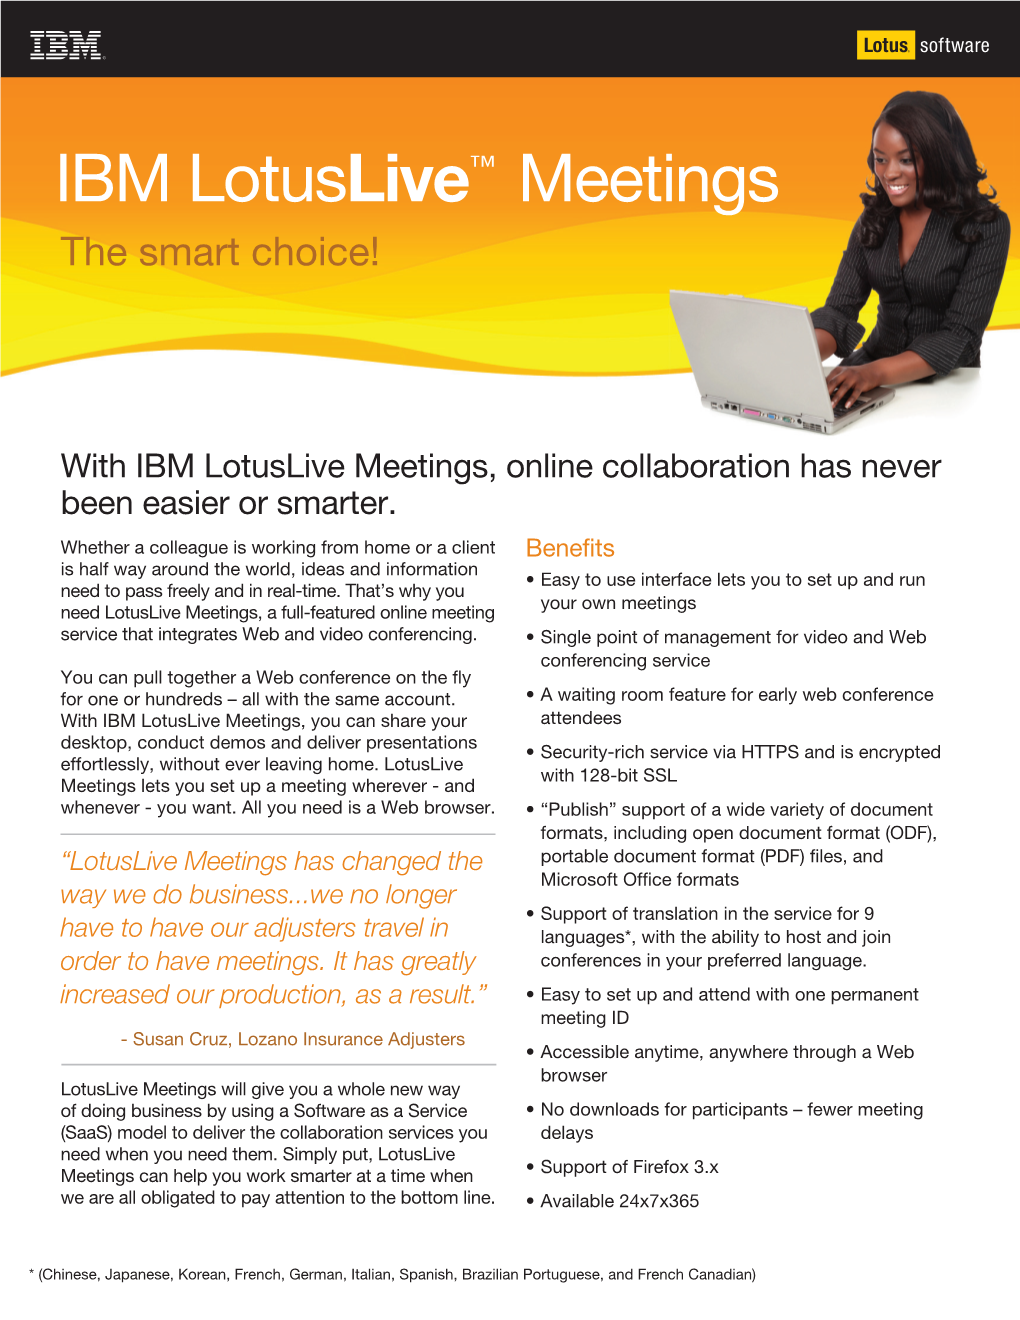 IBM Lotuslive™ Meetings the Smart Choice!